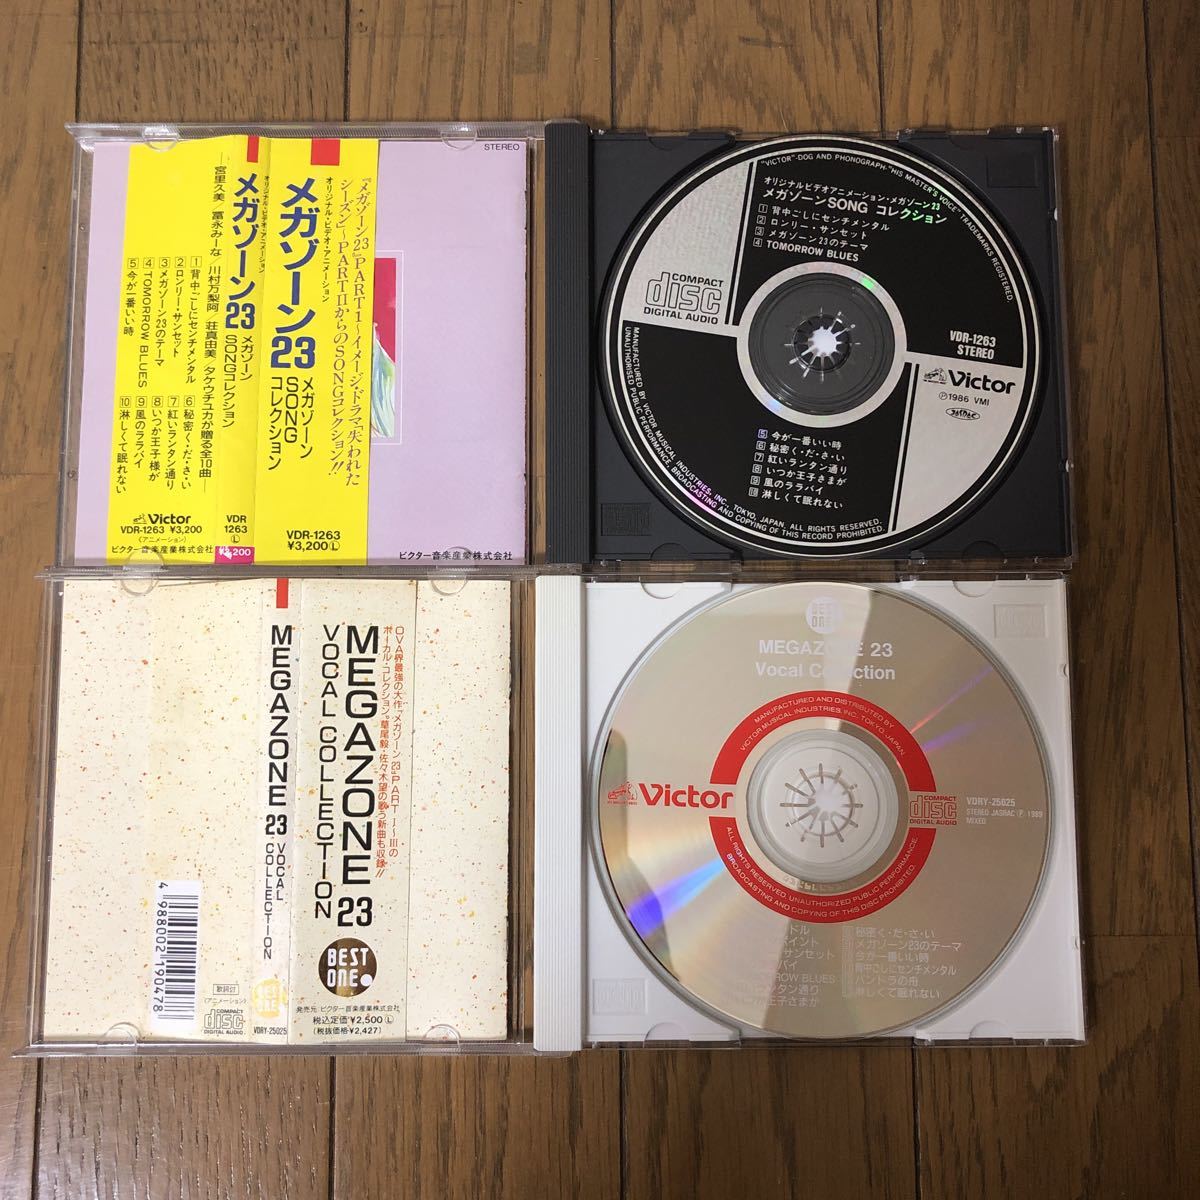 MEGAZONE 23 Megazone 23 CD 5 шт. комплект саундтрек four Spirits song коллекция VOCAL COLECTION